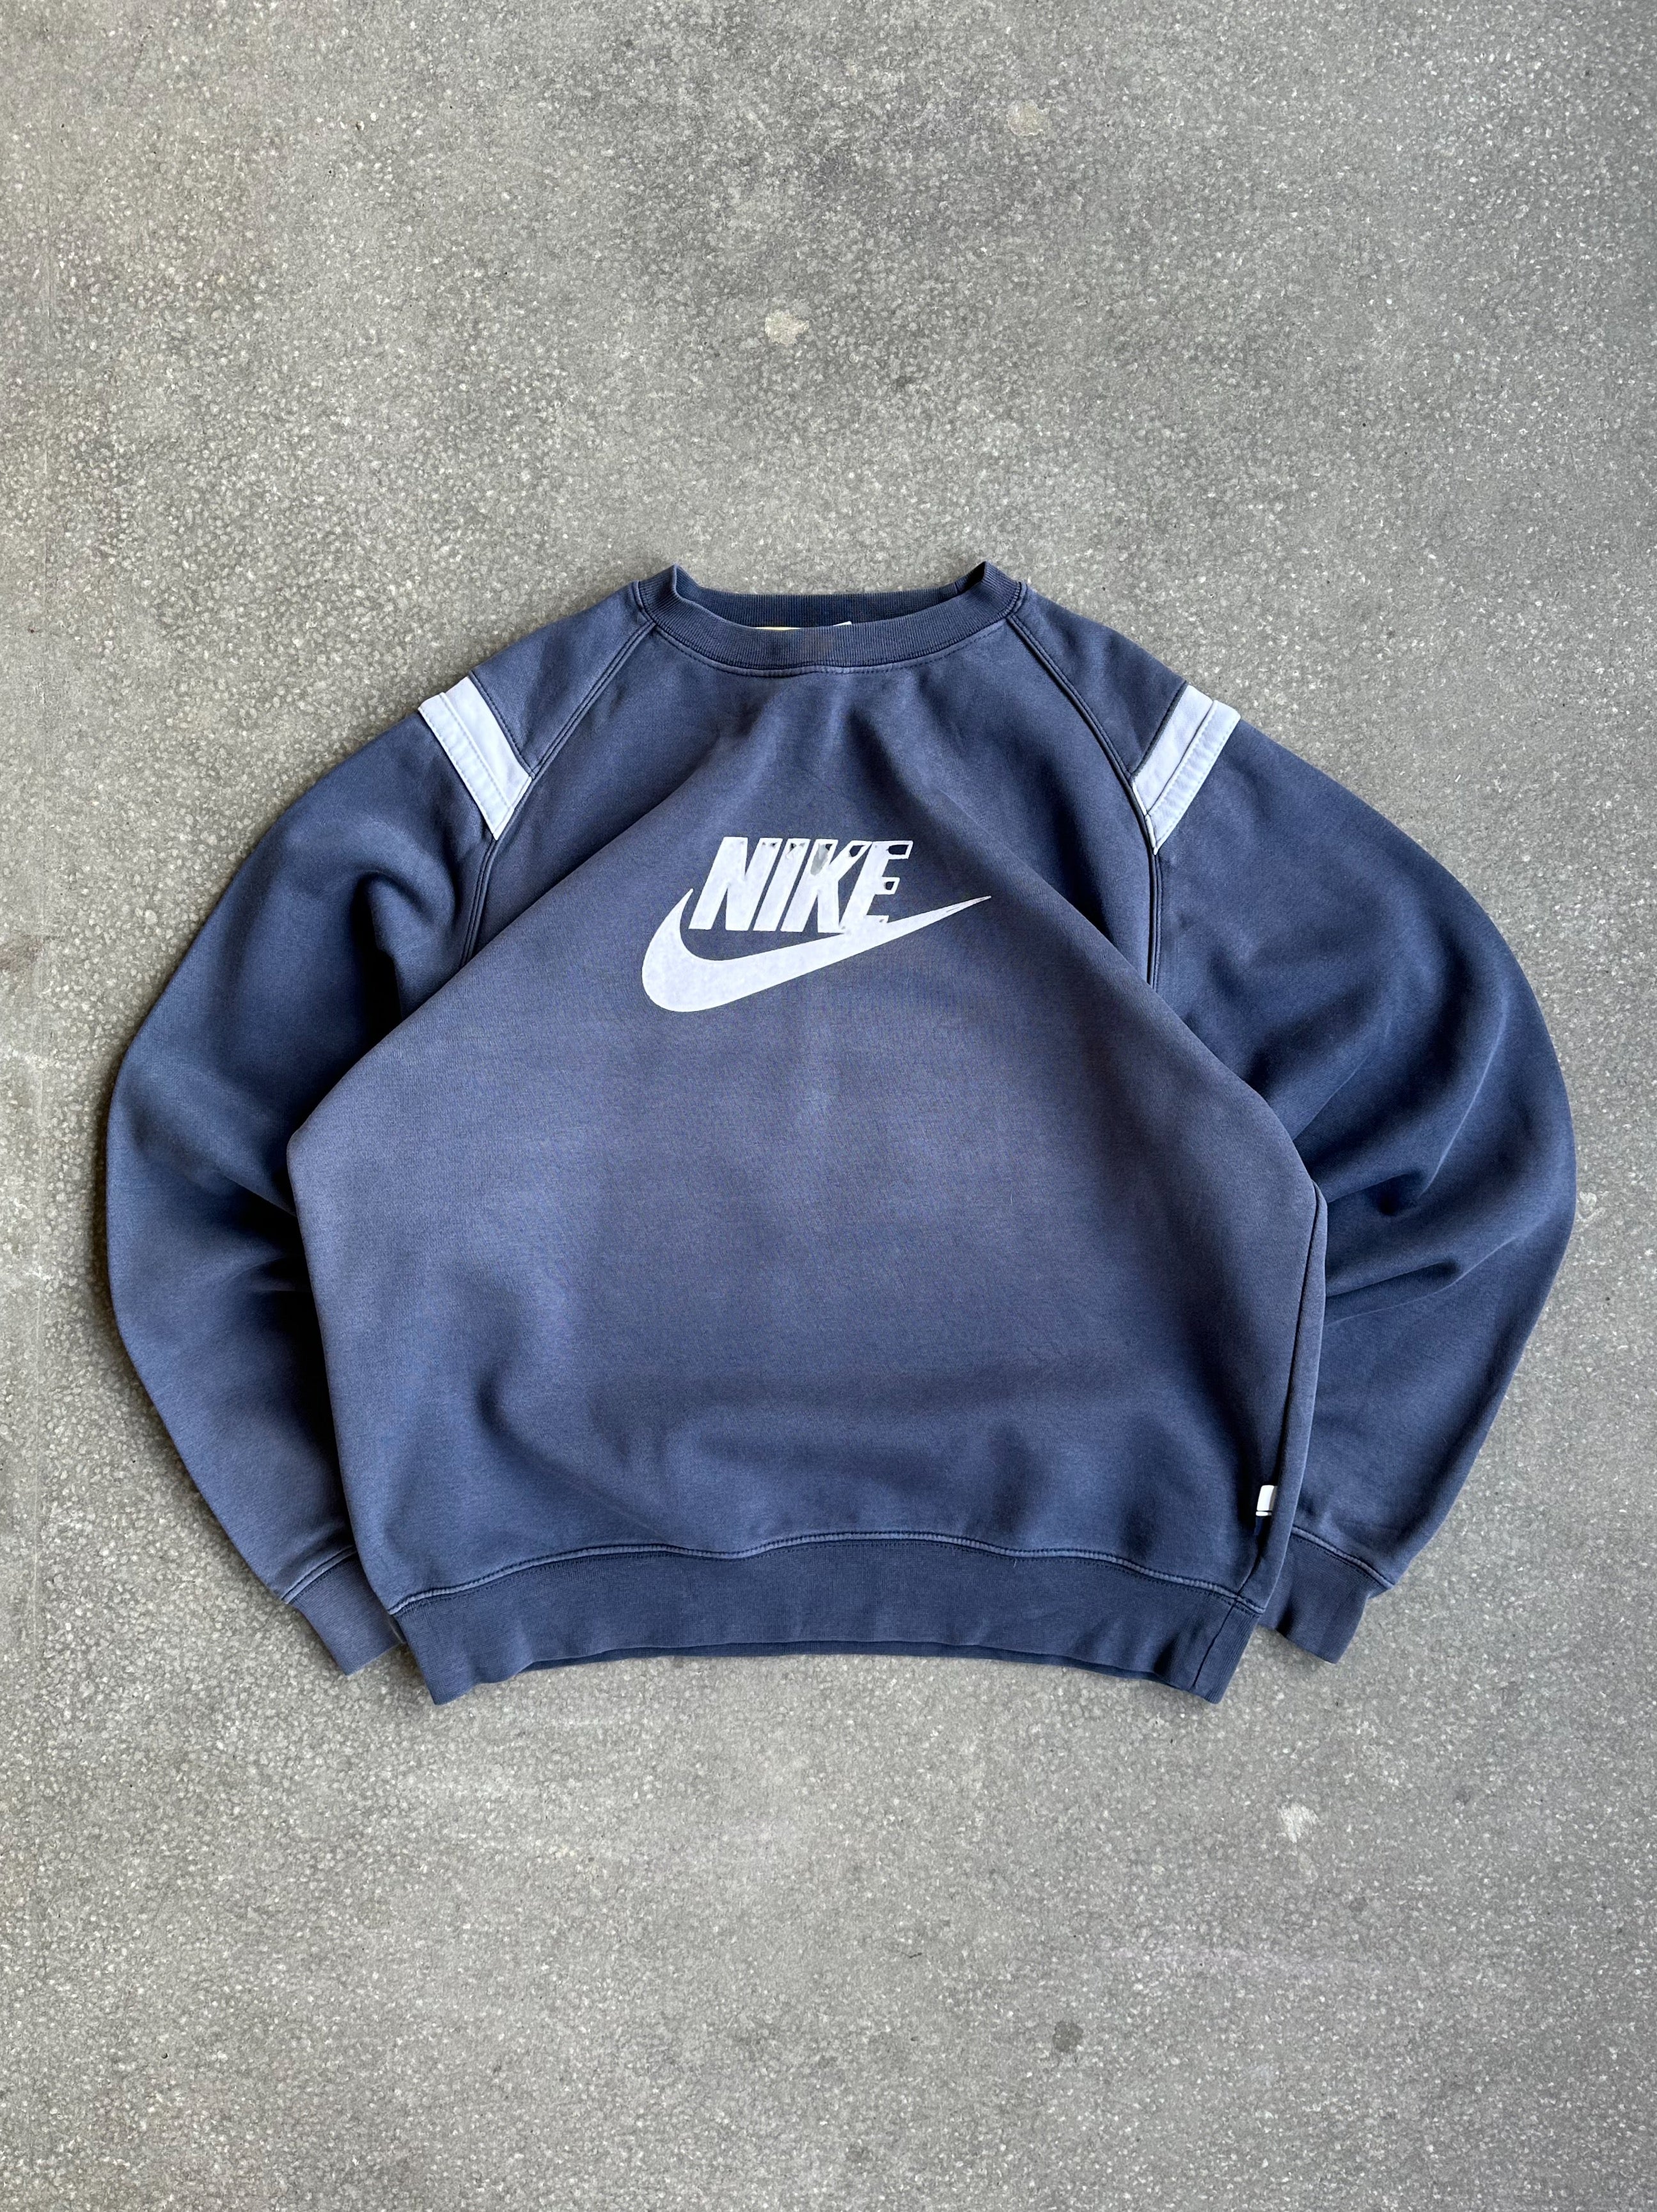 Vintage Nike Crewneck Sweater - Small